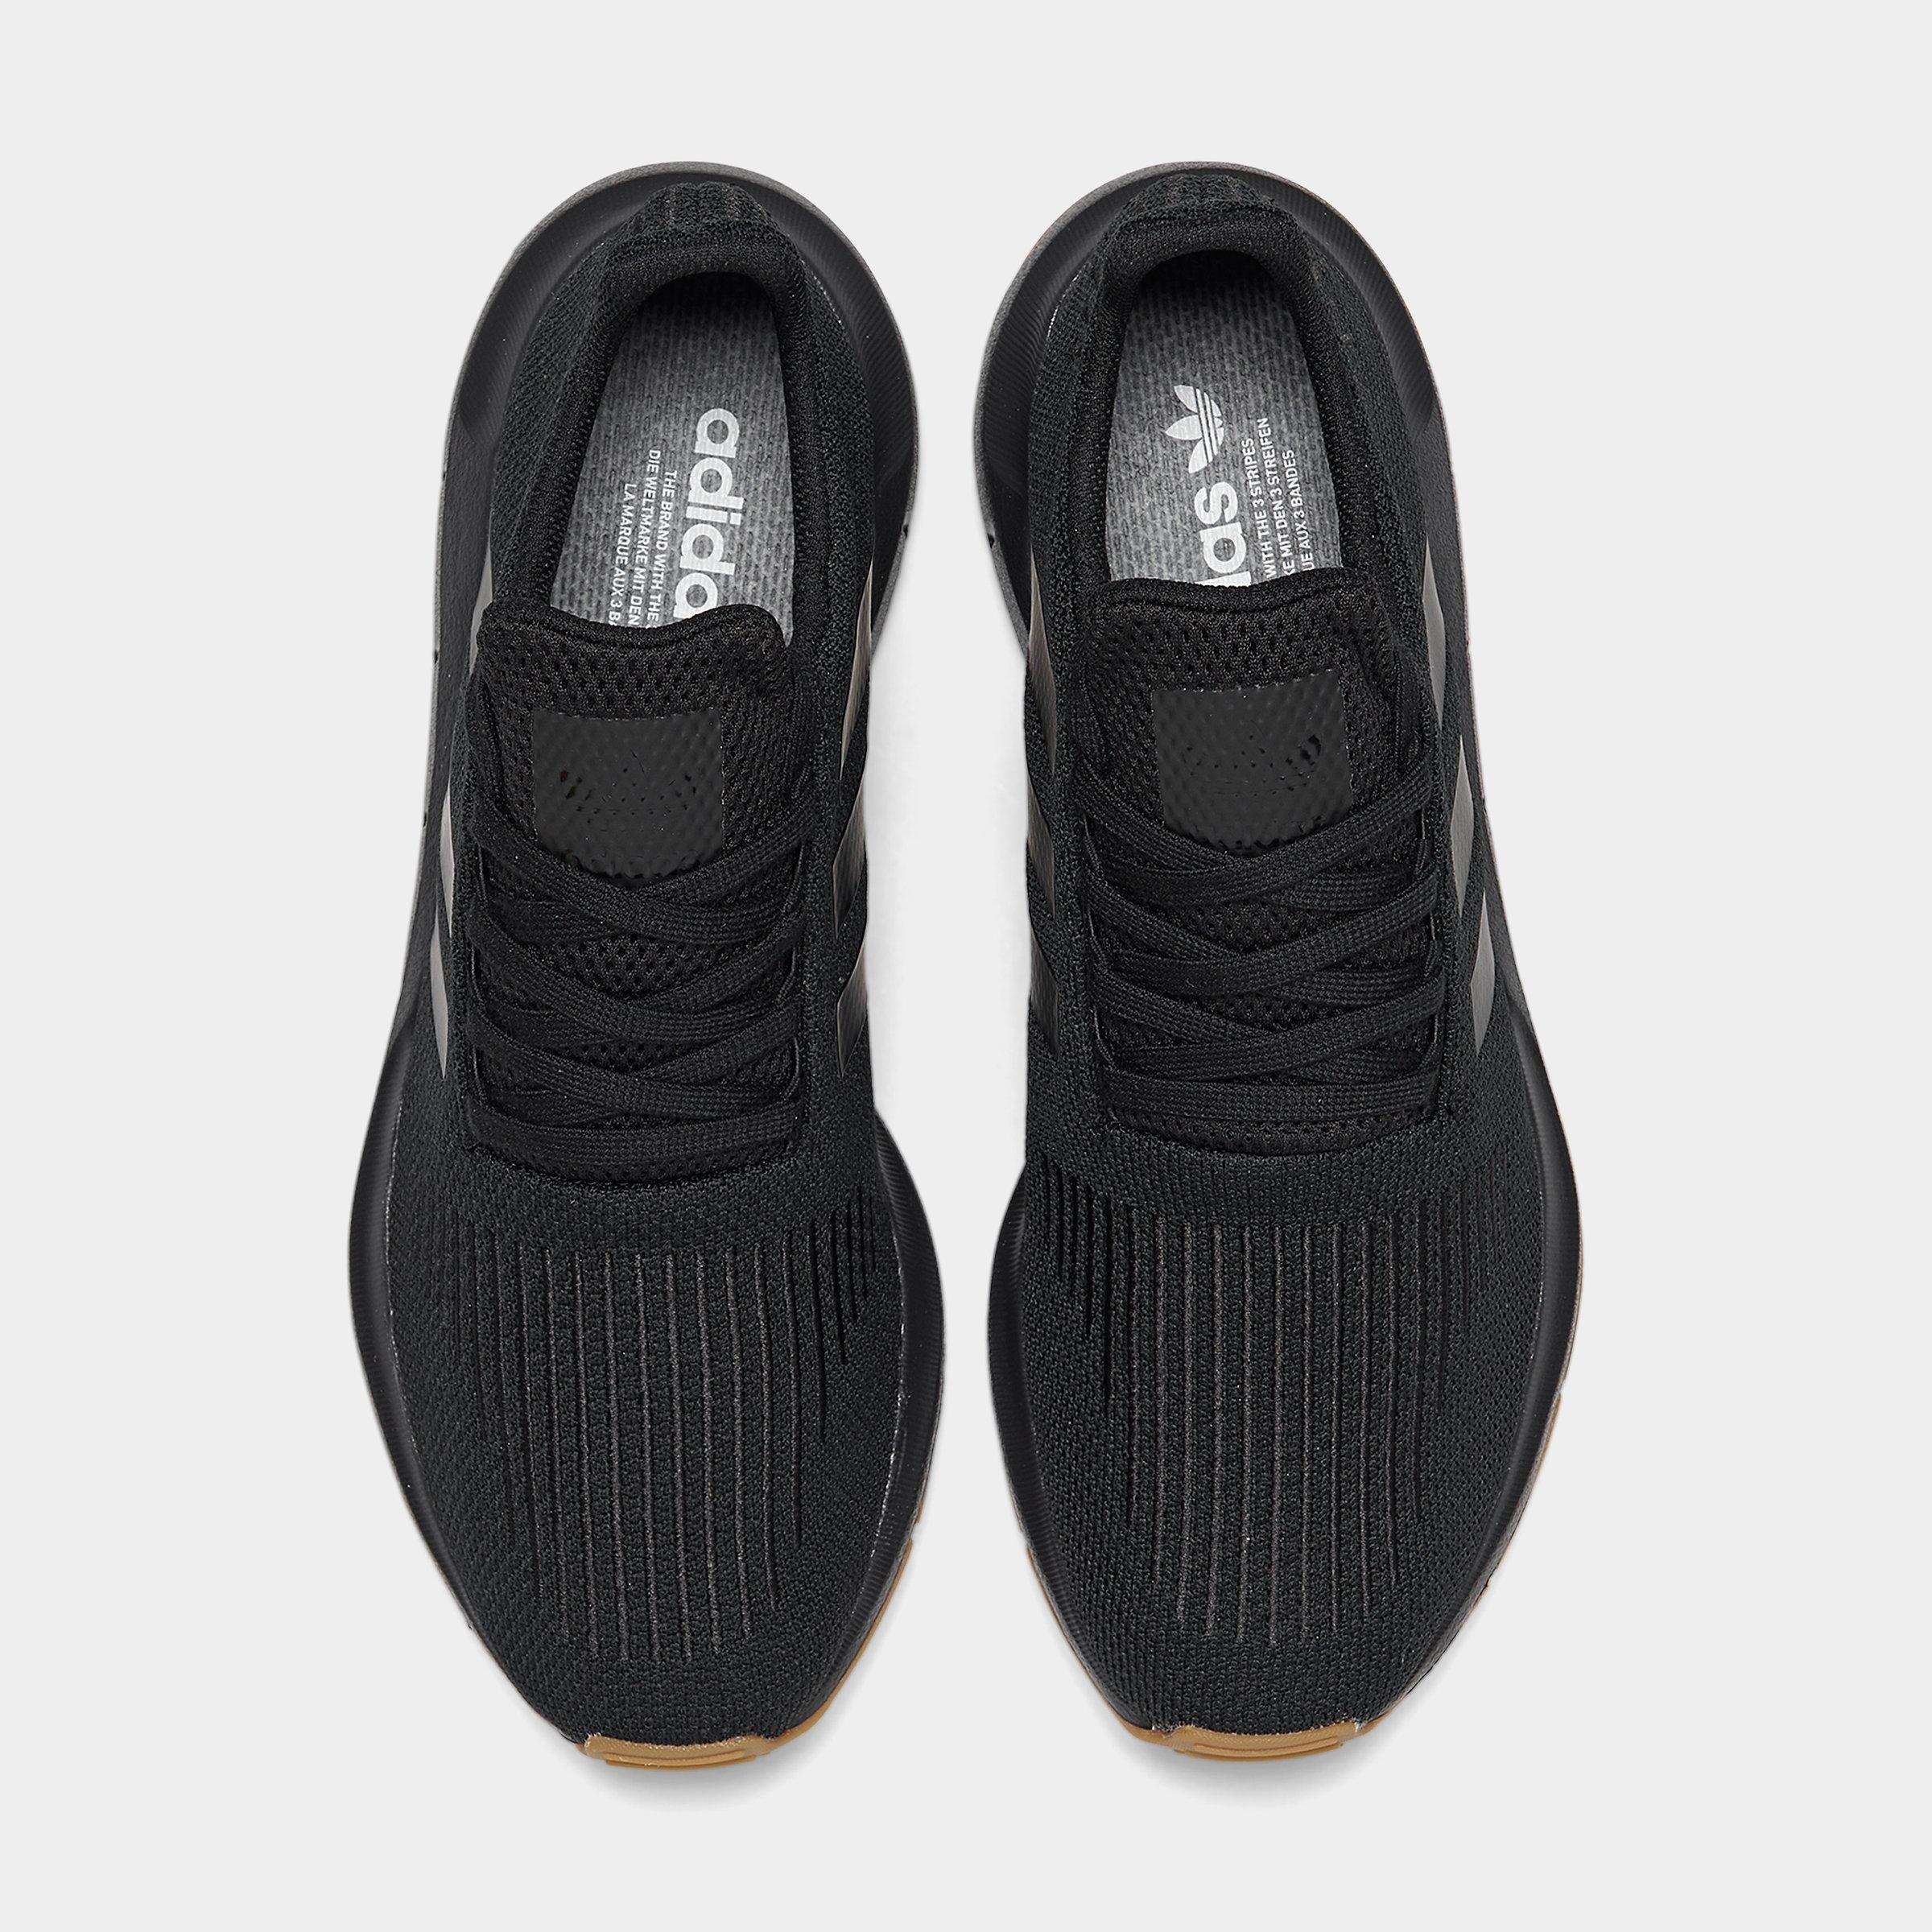 Men's Originals Swift Run Casual Shoes| Finish Line